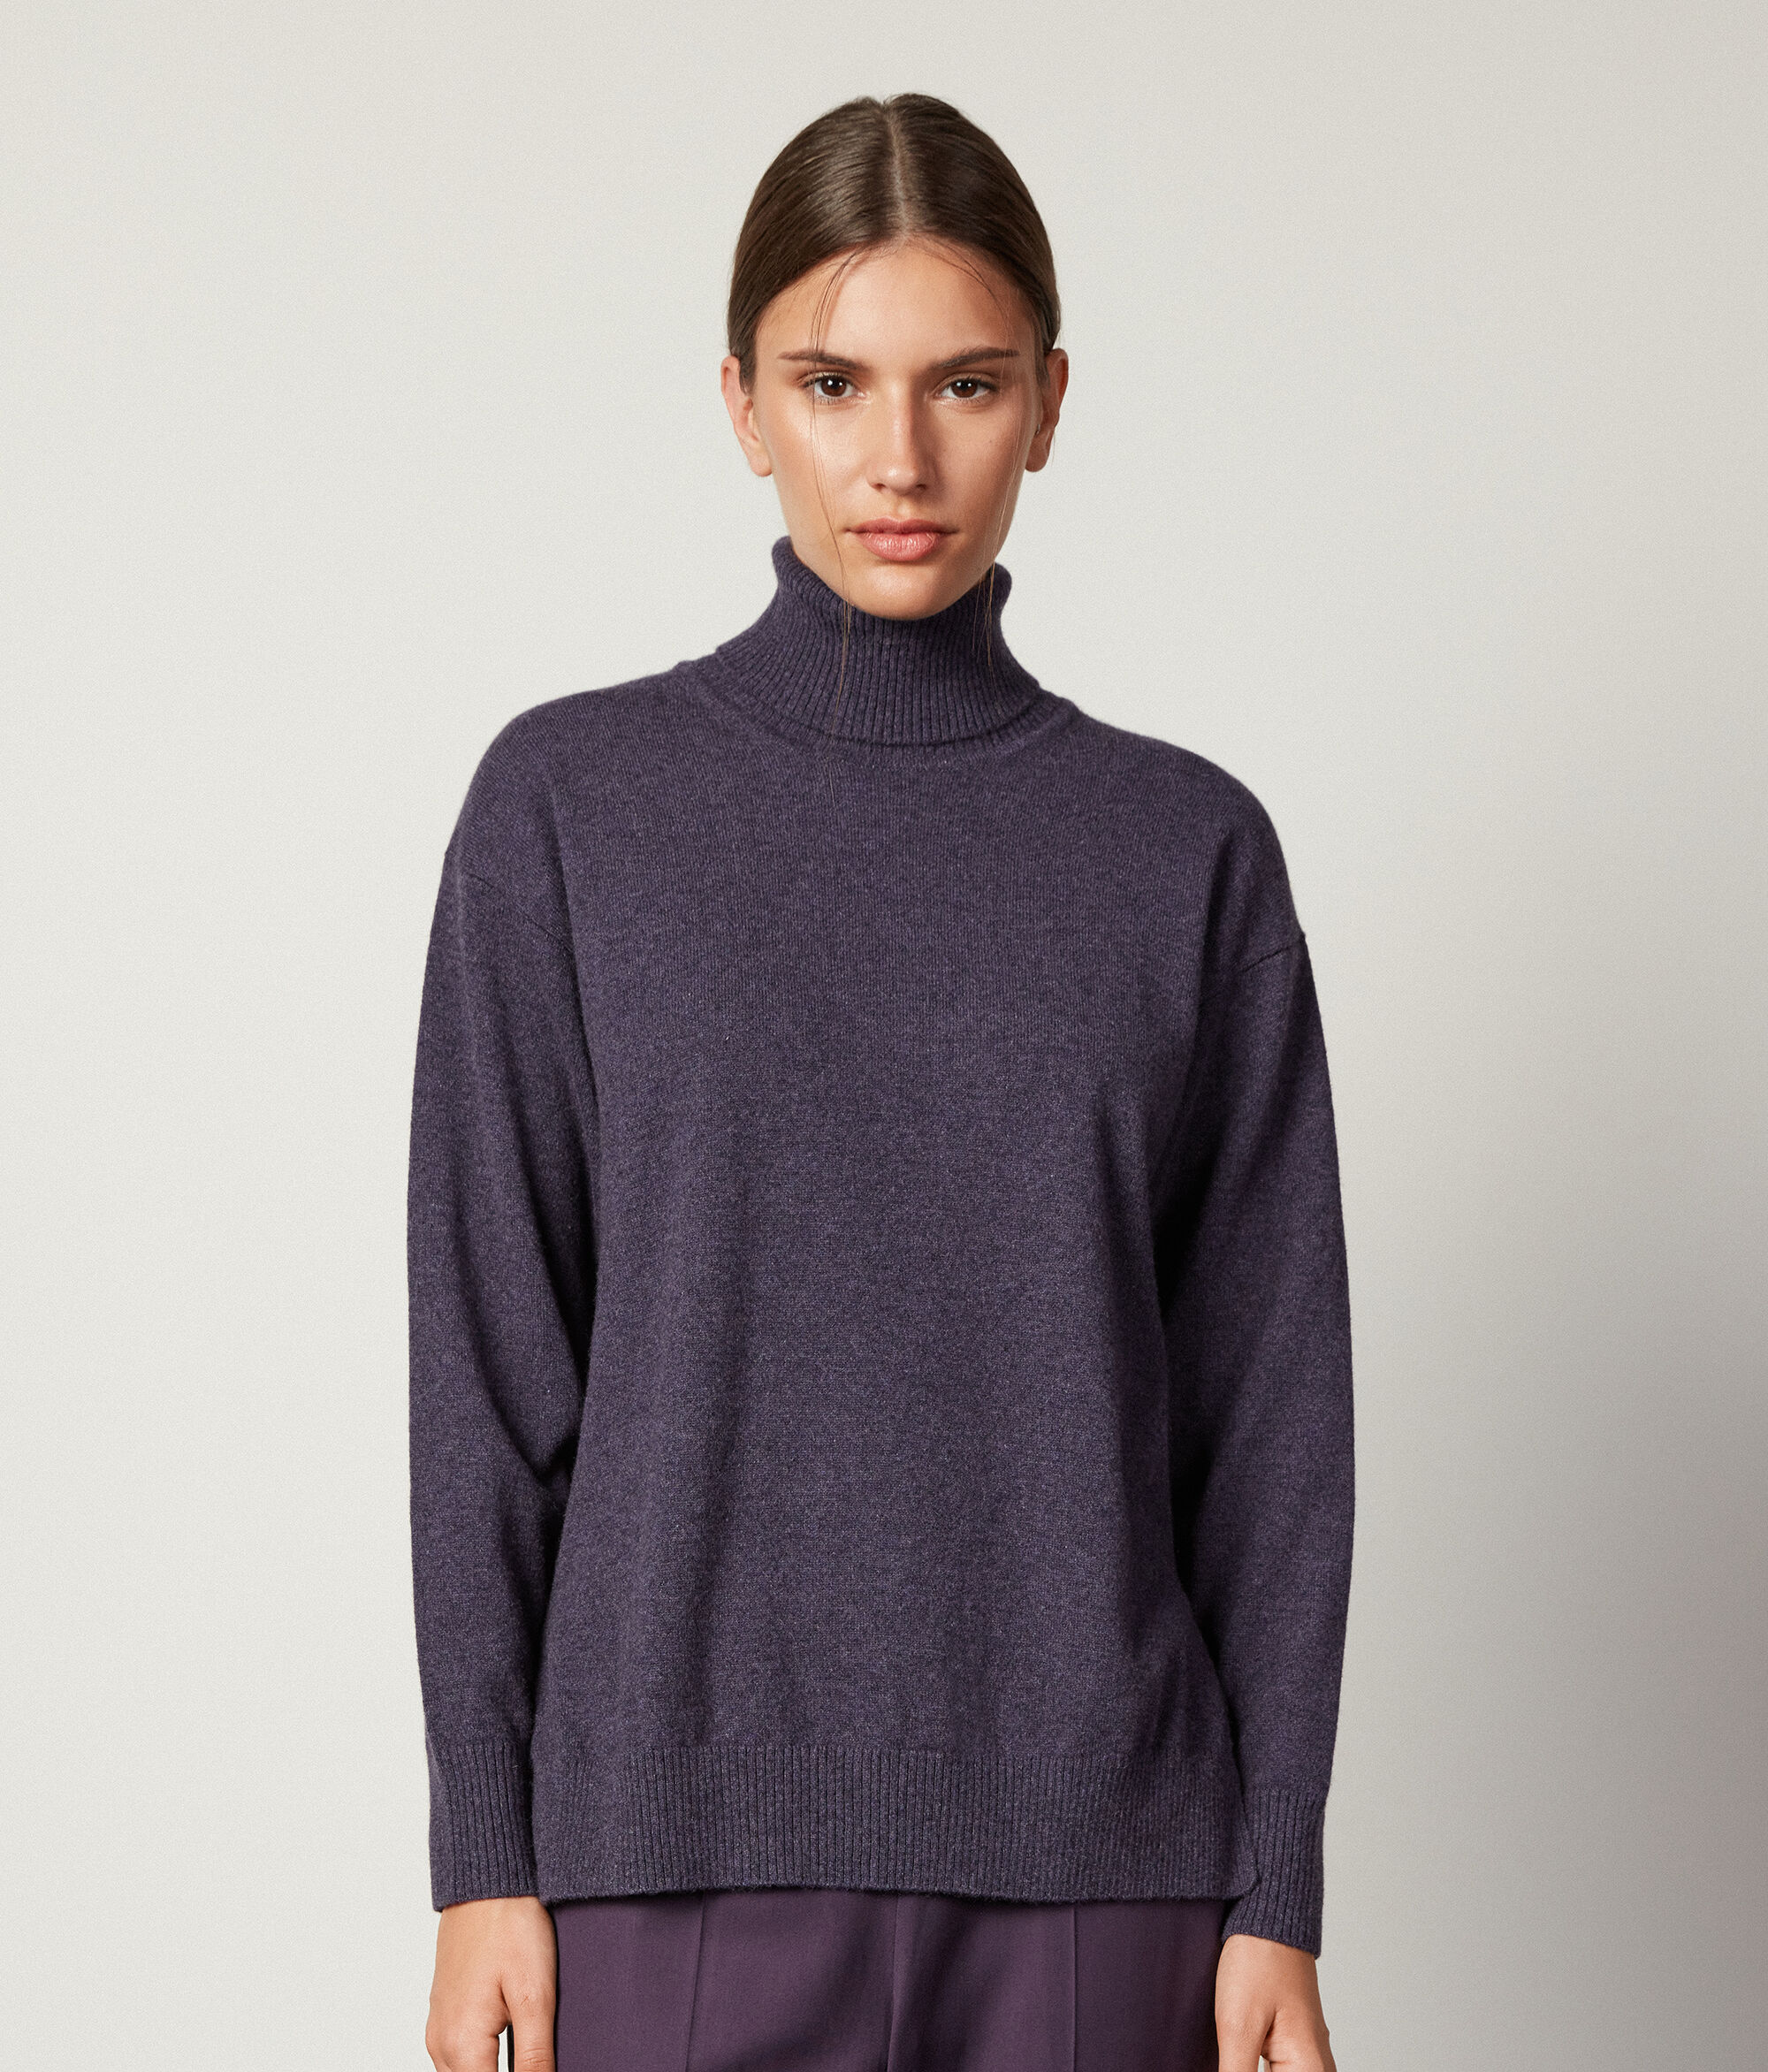 Ultrasoft Cashmere Turtleneck Sweater with Slits